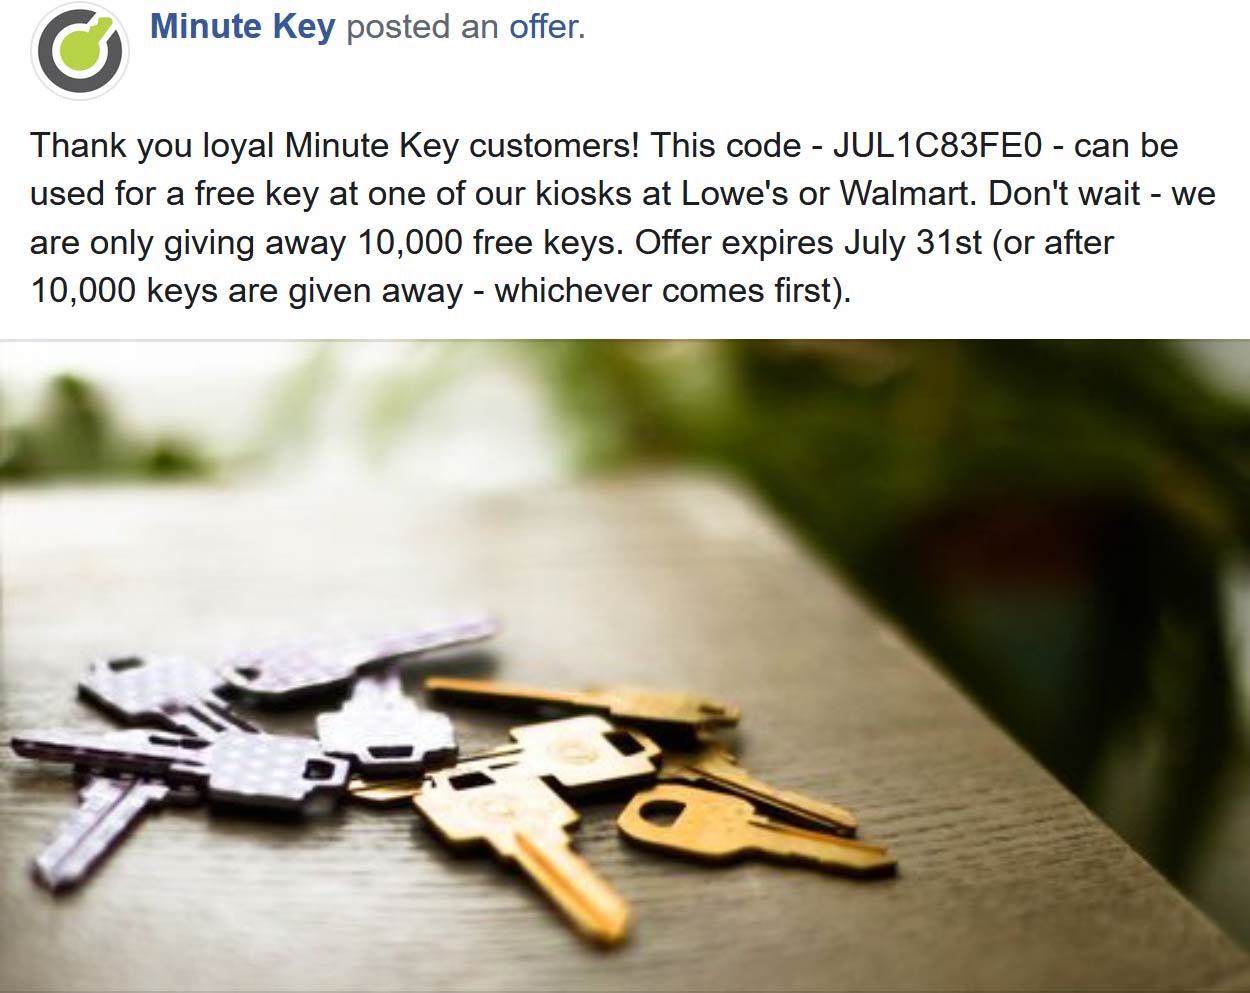 Minute Key stores Coupon  Free duplicate key at Minute Key inside Lowes & Walmart via promo code JUL1C83FE0 #minutekey 